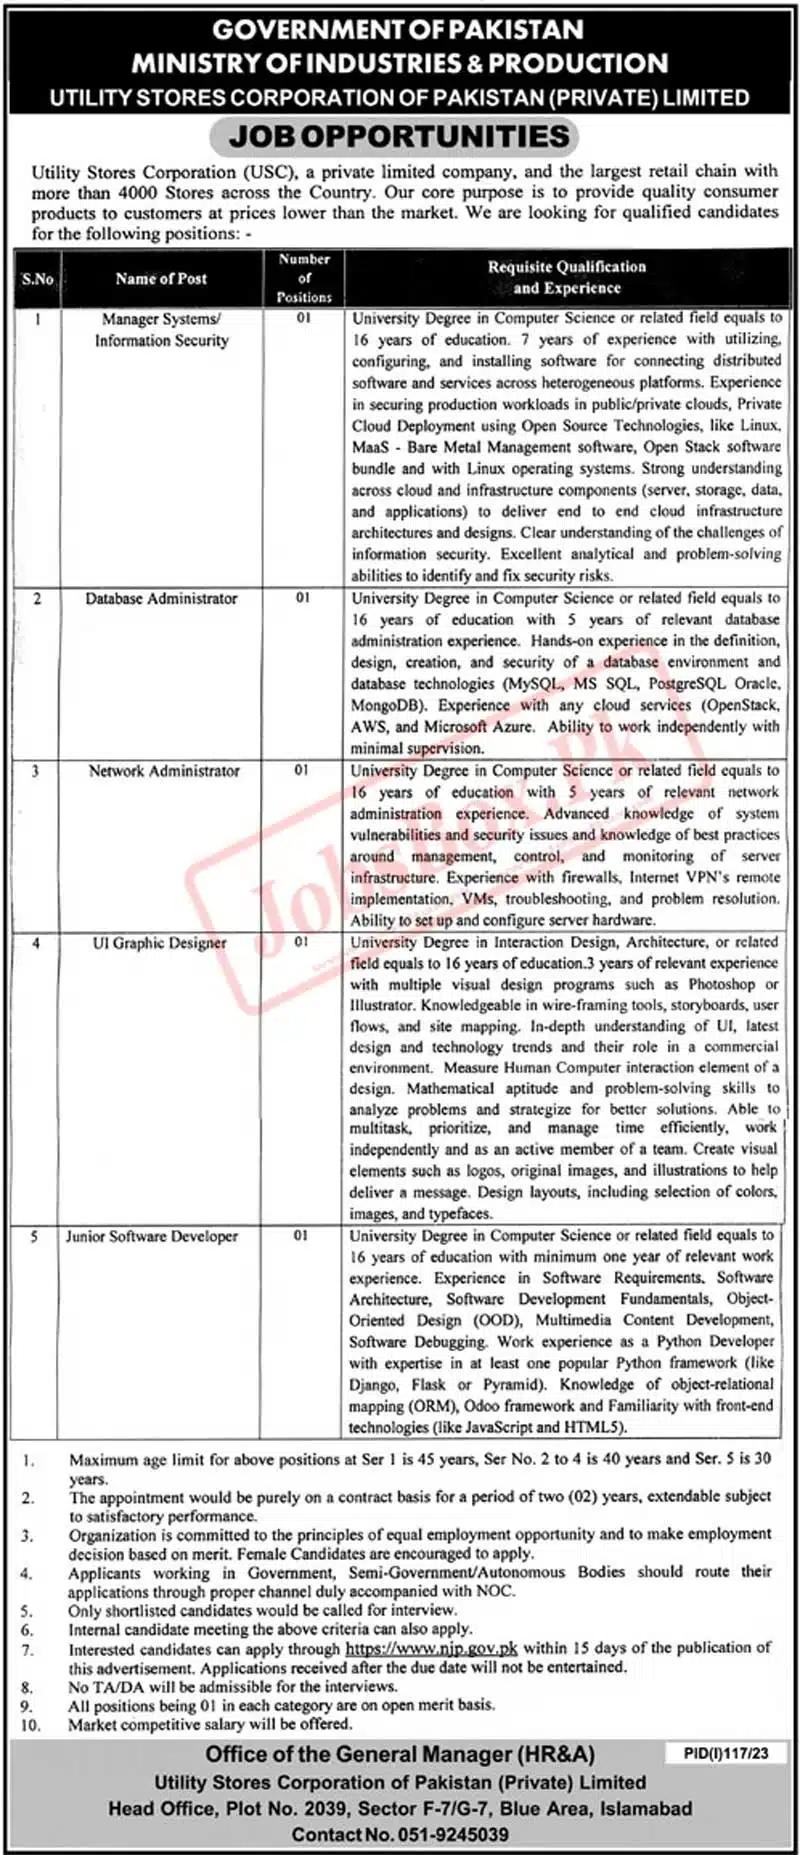 Utility Stores Corporation of Pakistan Jobs 2023 - USC Recruitment Notice